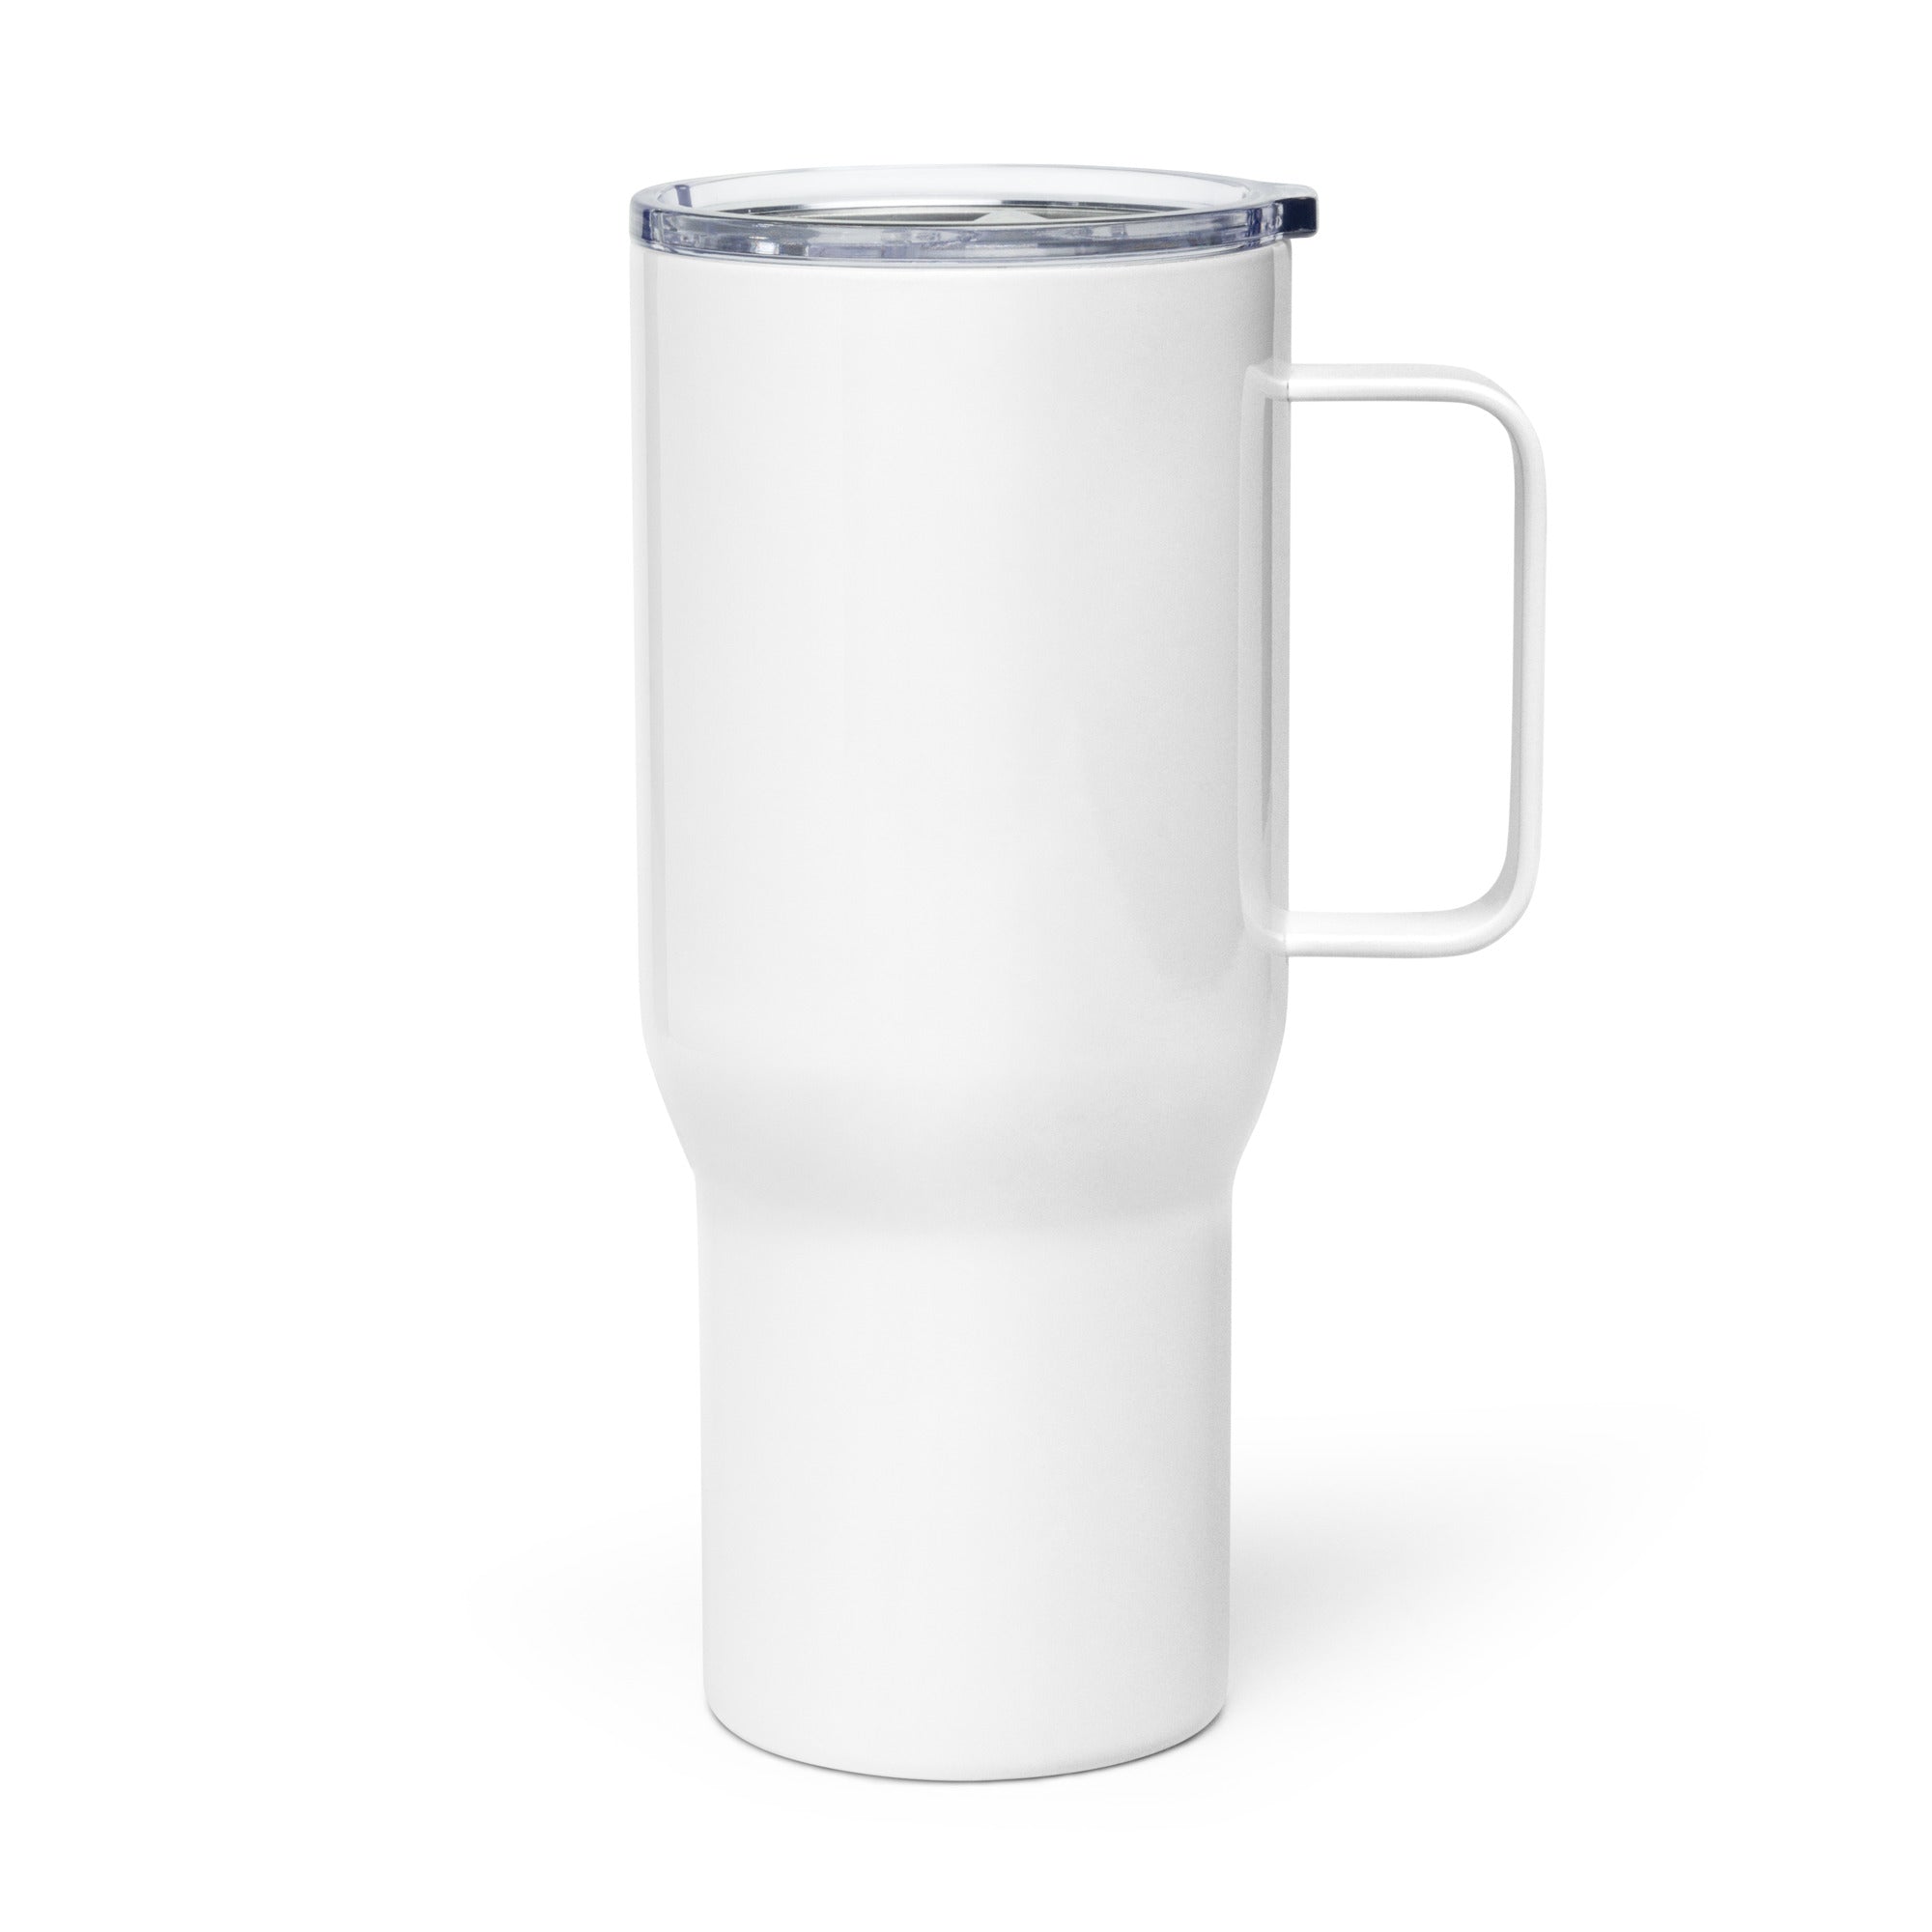 Raw Lax Travel mug with a handle